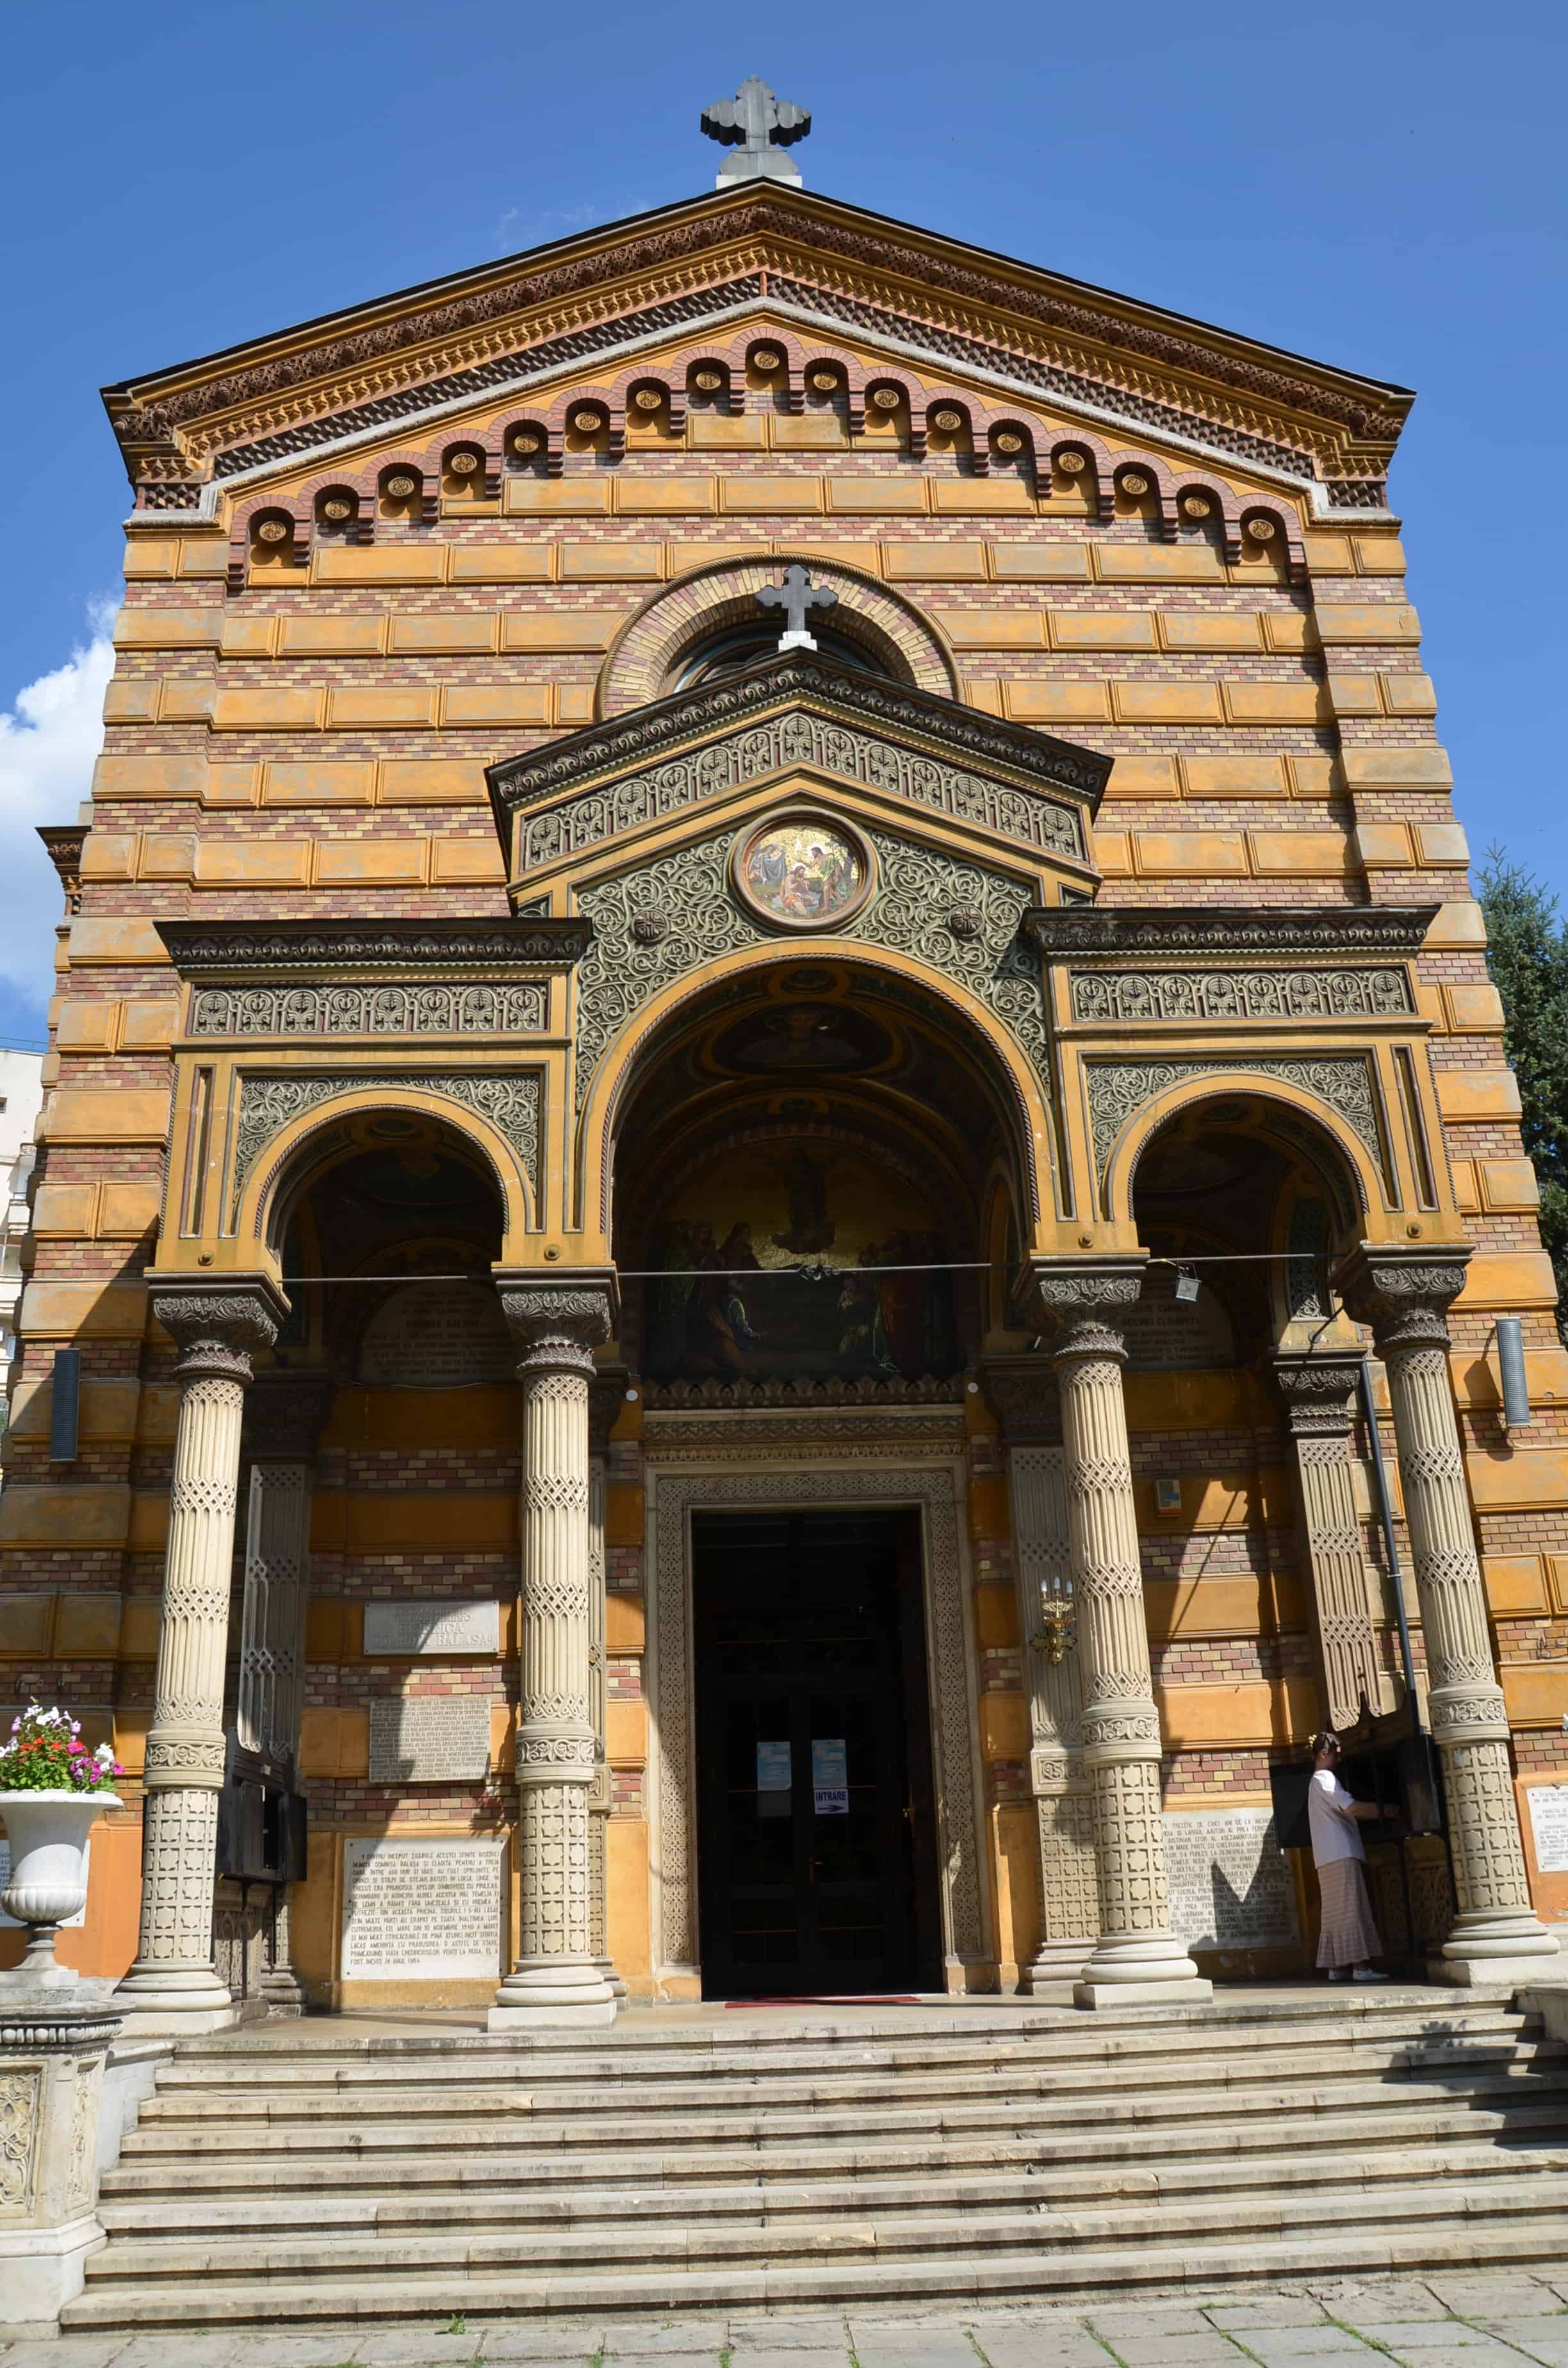 Biserica Domnița Bălașa in Bucharest, Romania